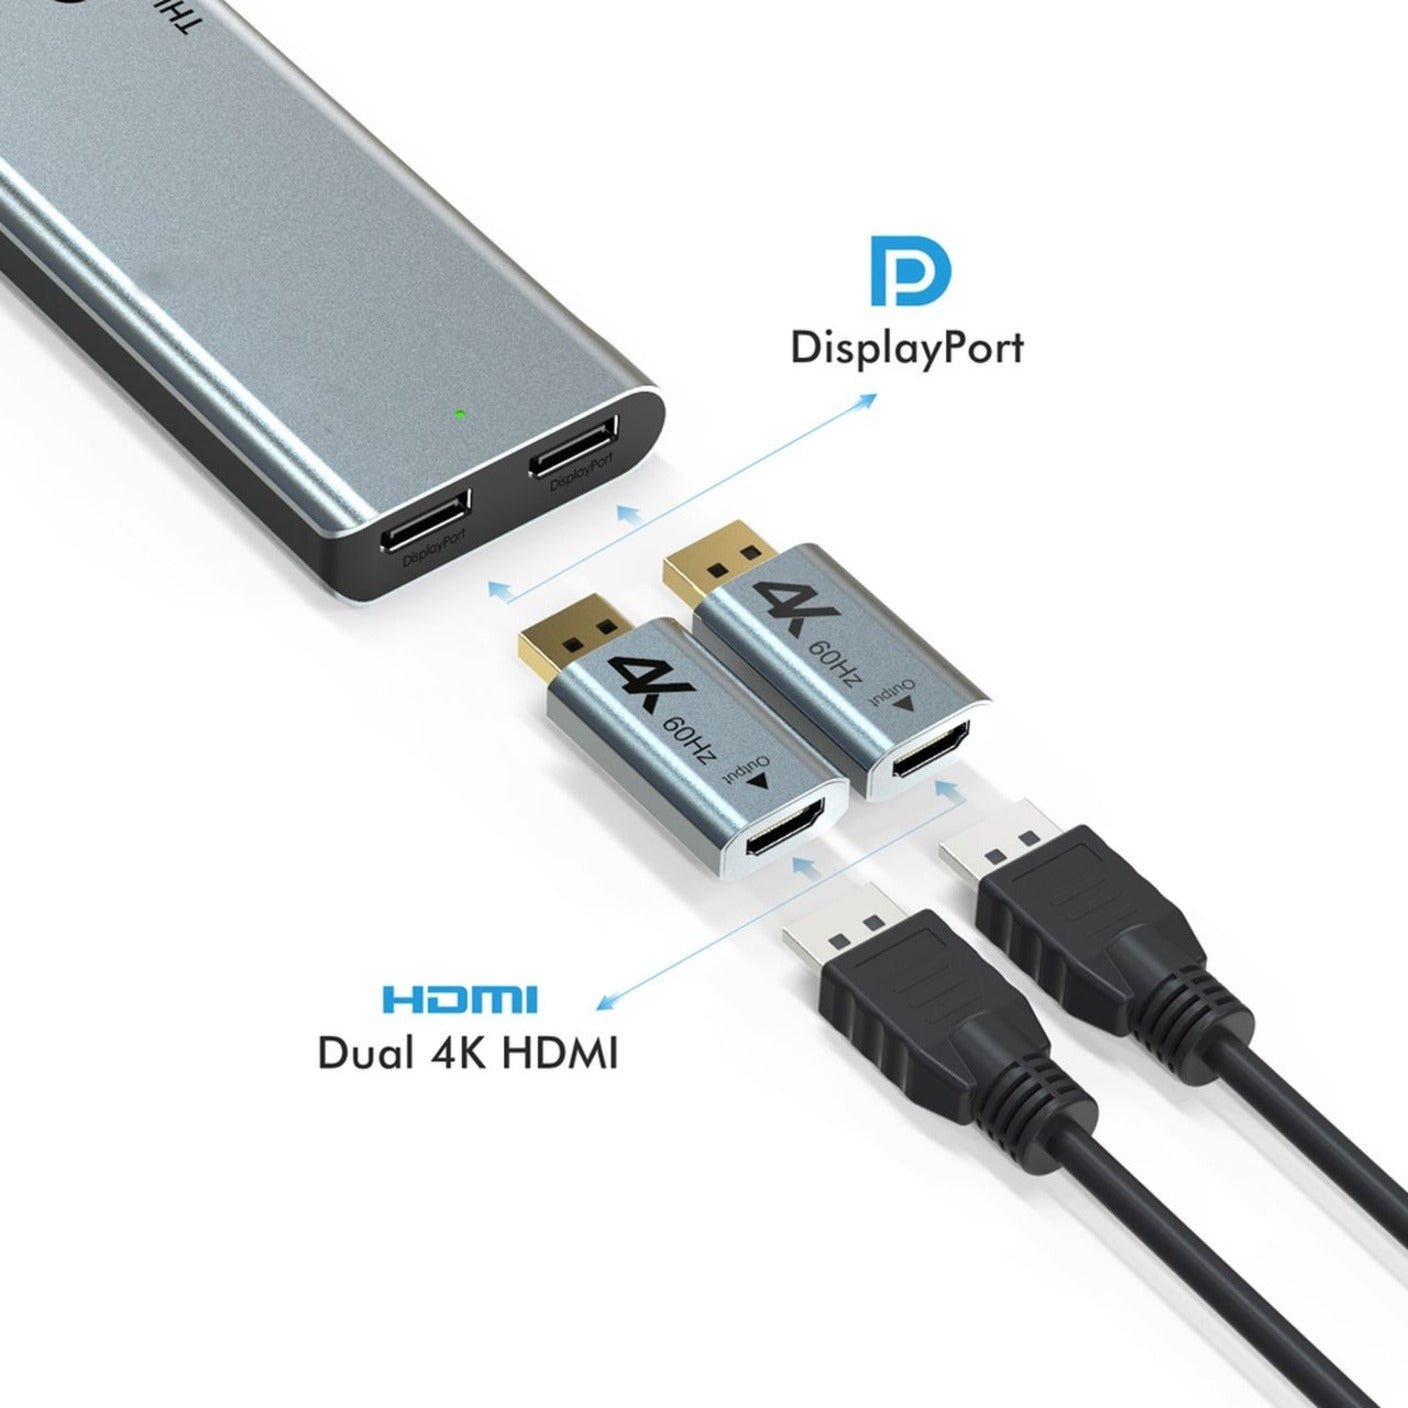 4XEM 4XUTD05(H) Thunderbolt 3 Dual 4K Mini Docking Station, 2 Year Warranty, 2 DisplayPorts, 3 USB 3.0 Ports, Gigabit Ethernet